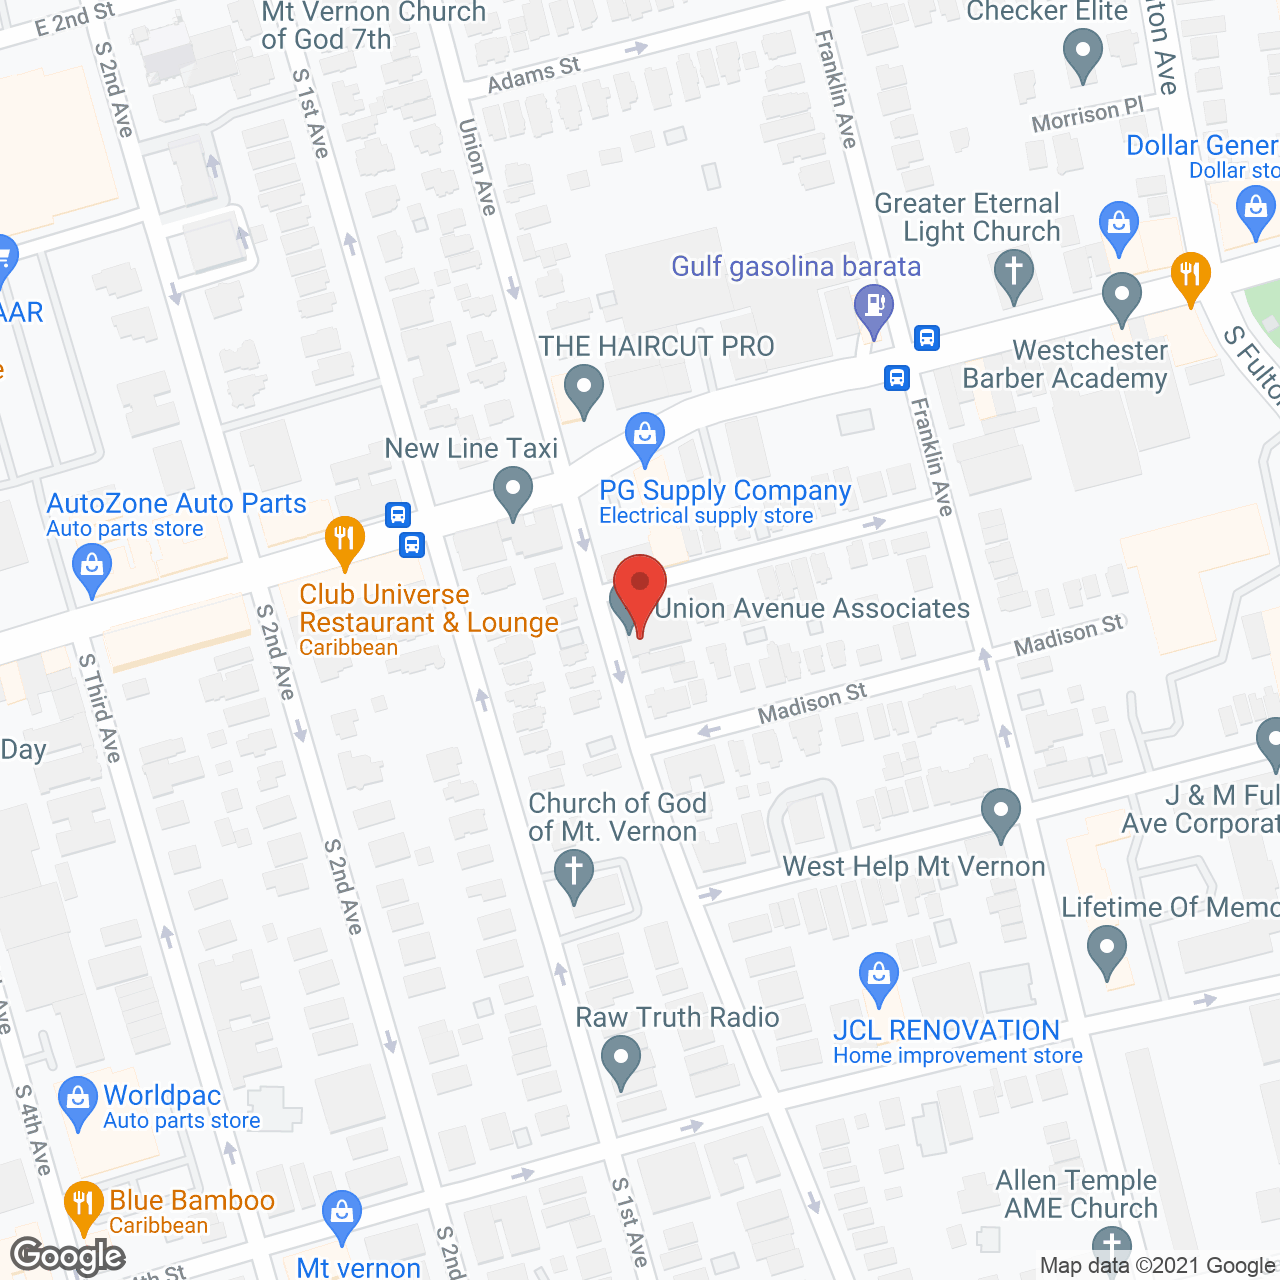 Union Avenue Assoc in google map